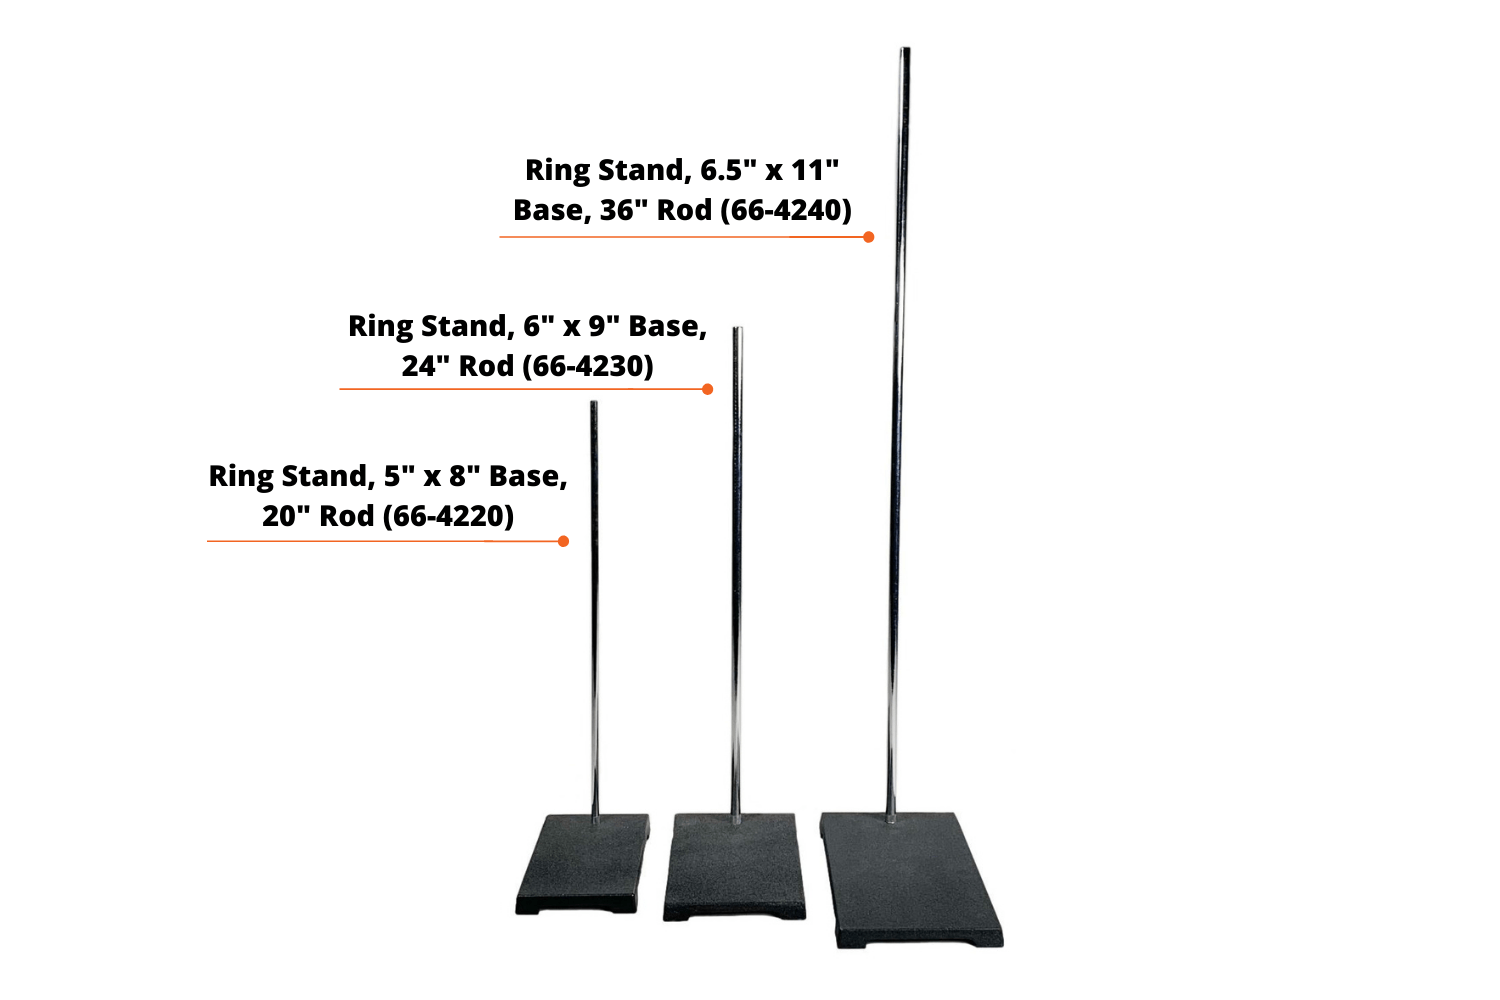 Arbor Scientific Ring Stand, 6.5" x 11" Base, 36" Rod